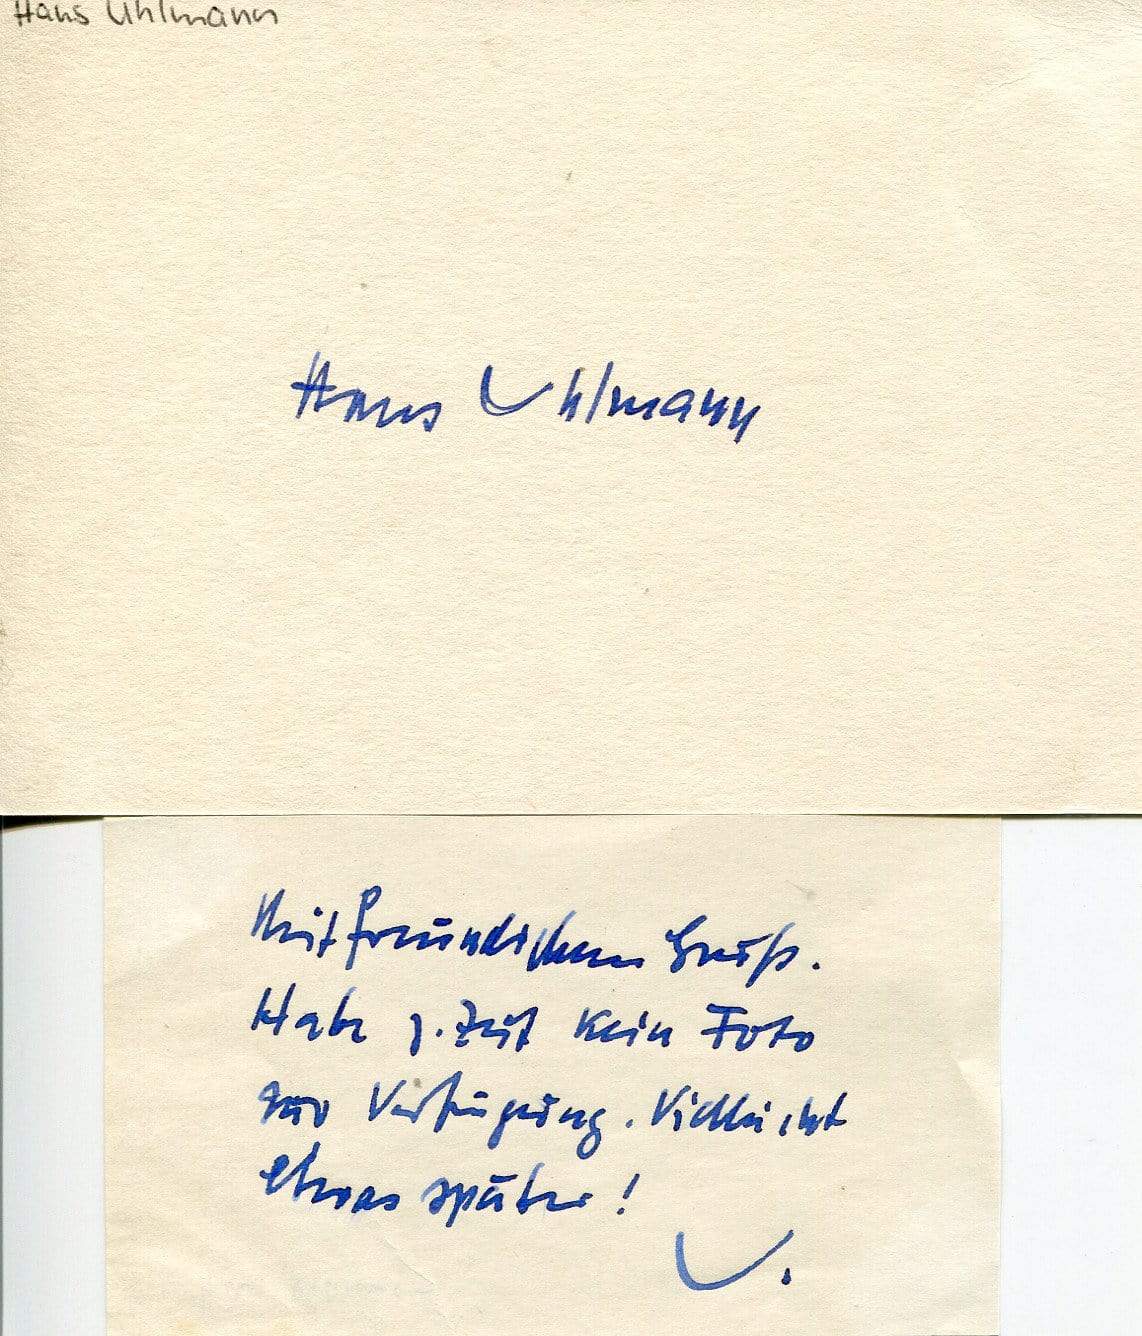 Uhlmann , Hans autograph